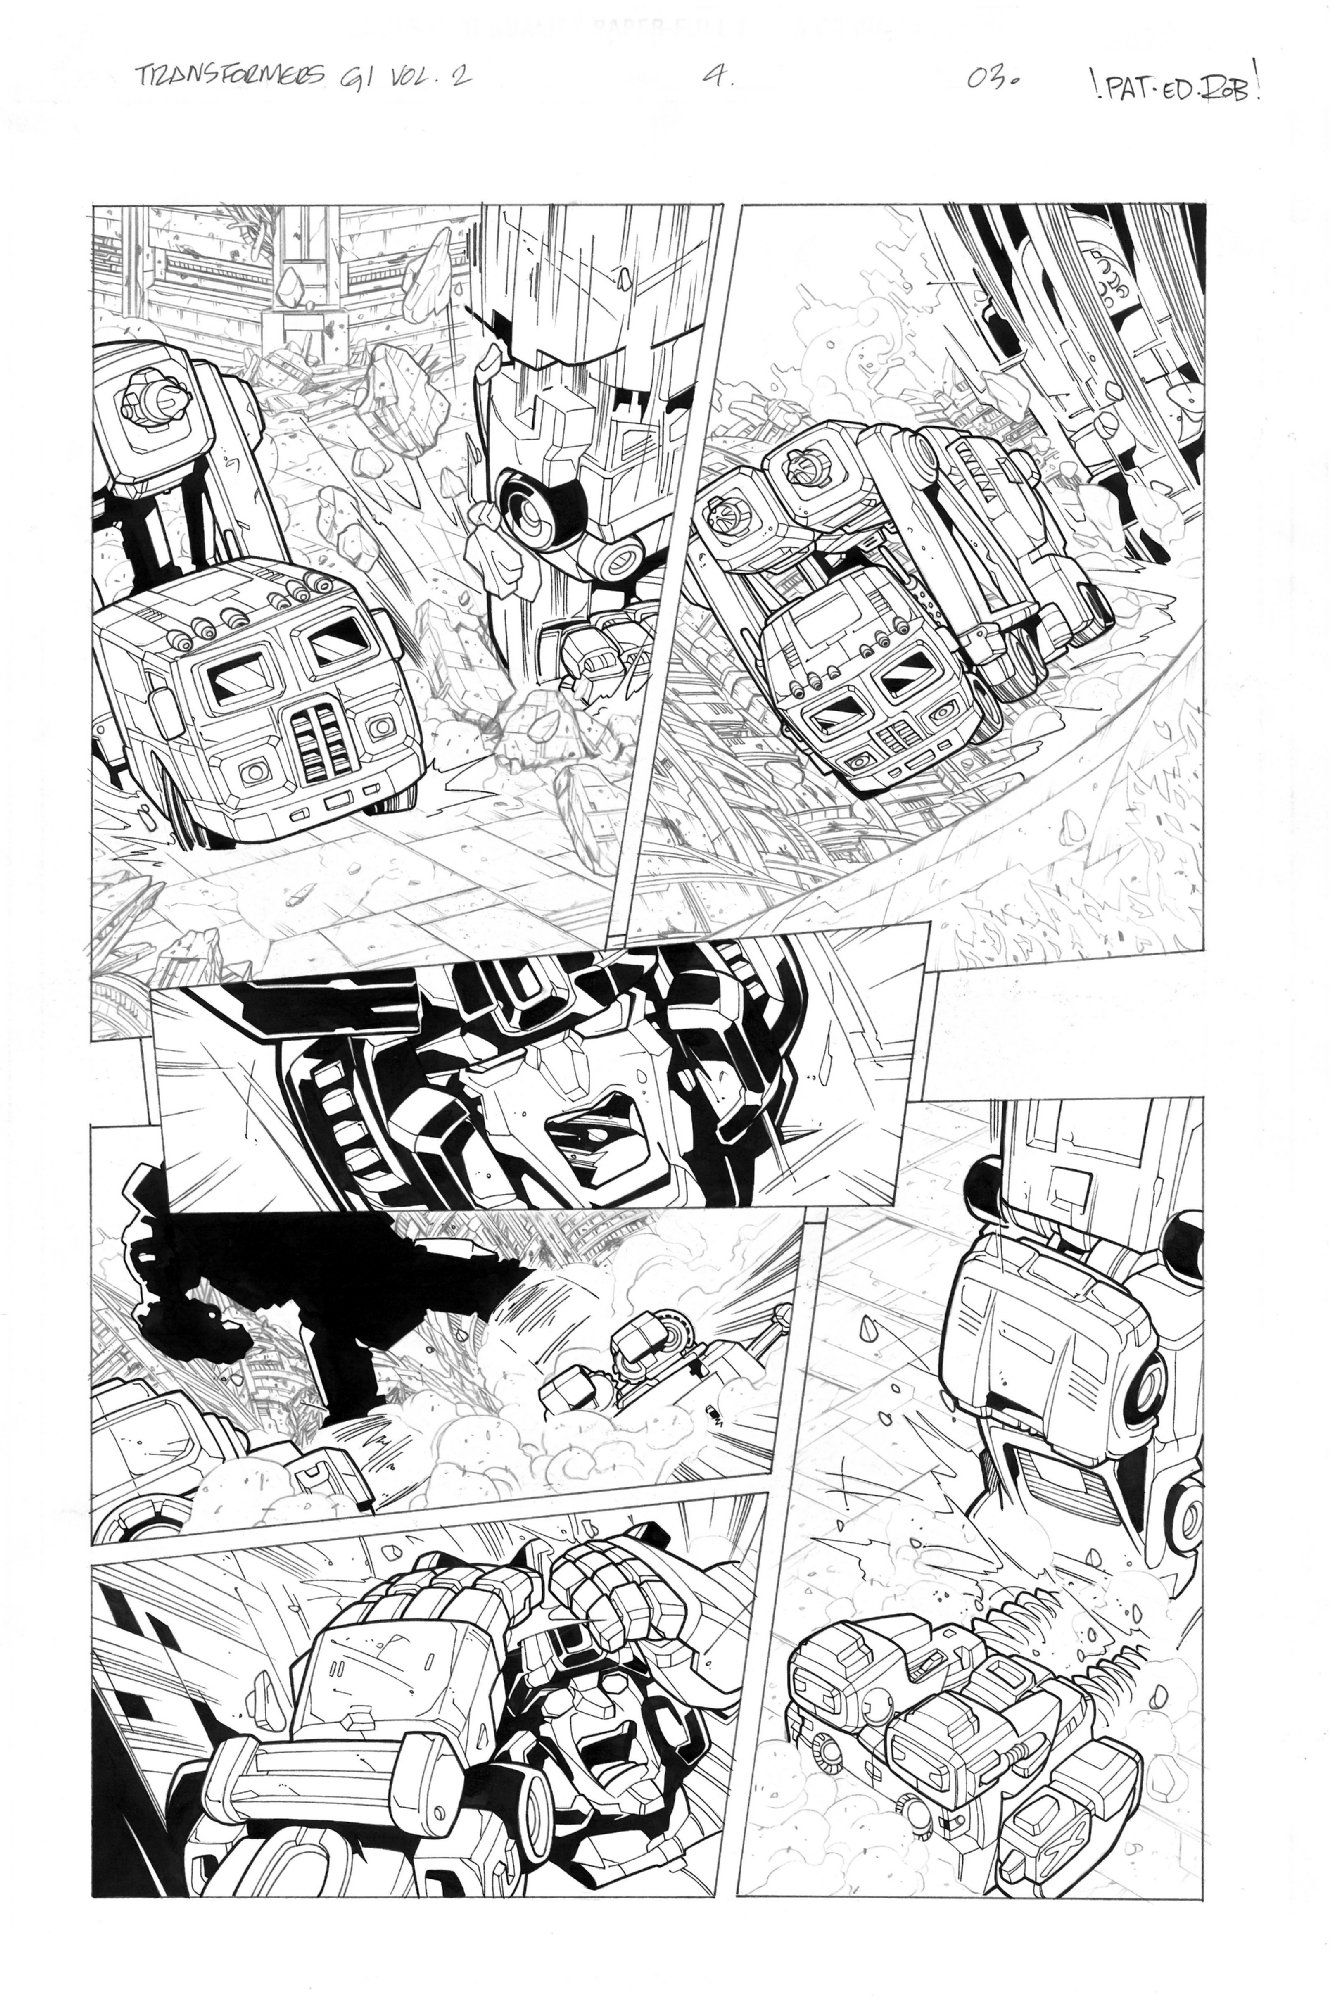 Transformers Generation One Vol 2 4 P3 In Derek Crabbes Transformers Comic Art Gallery Room 